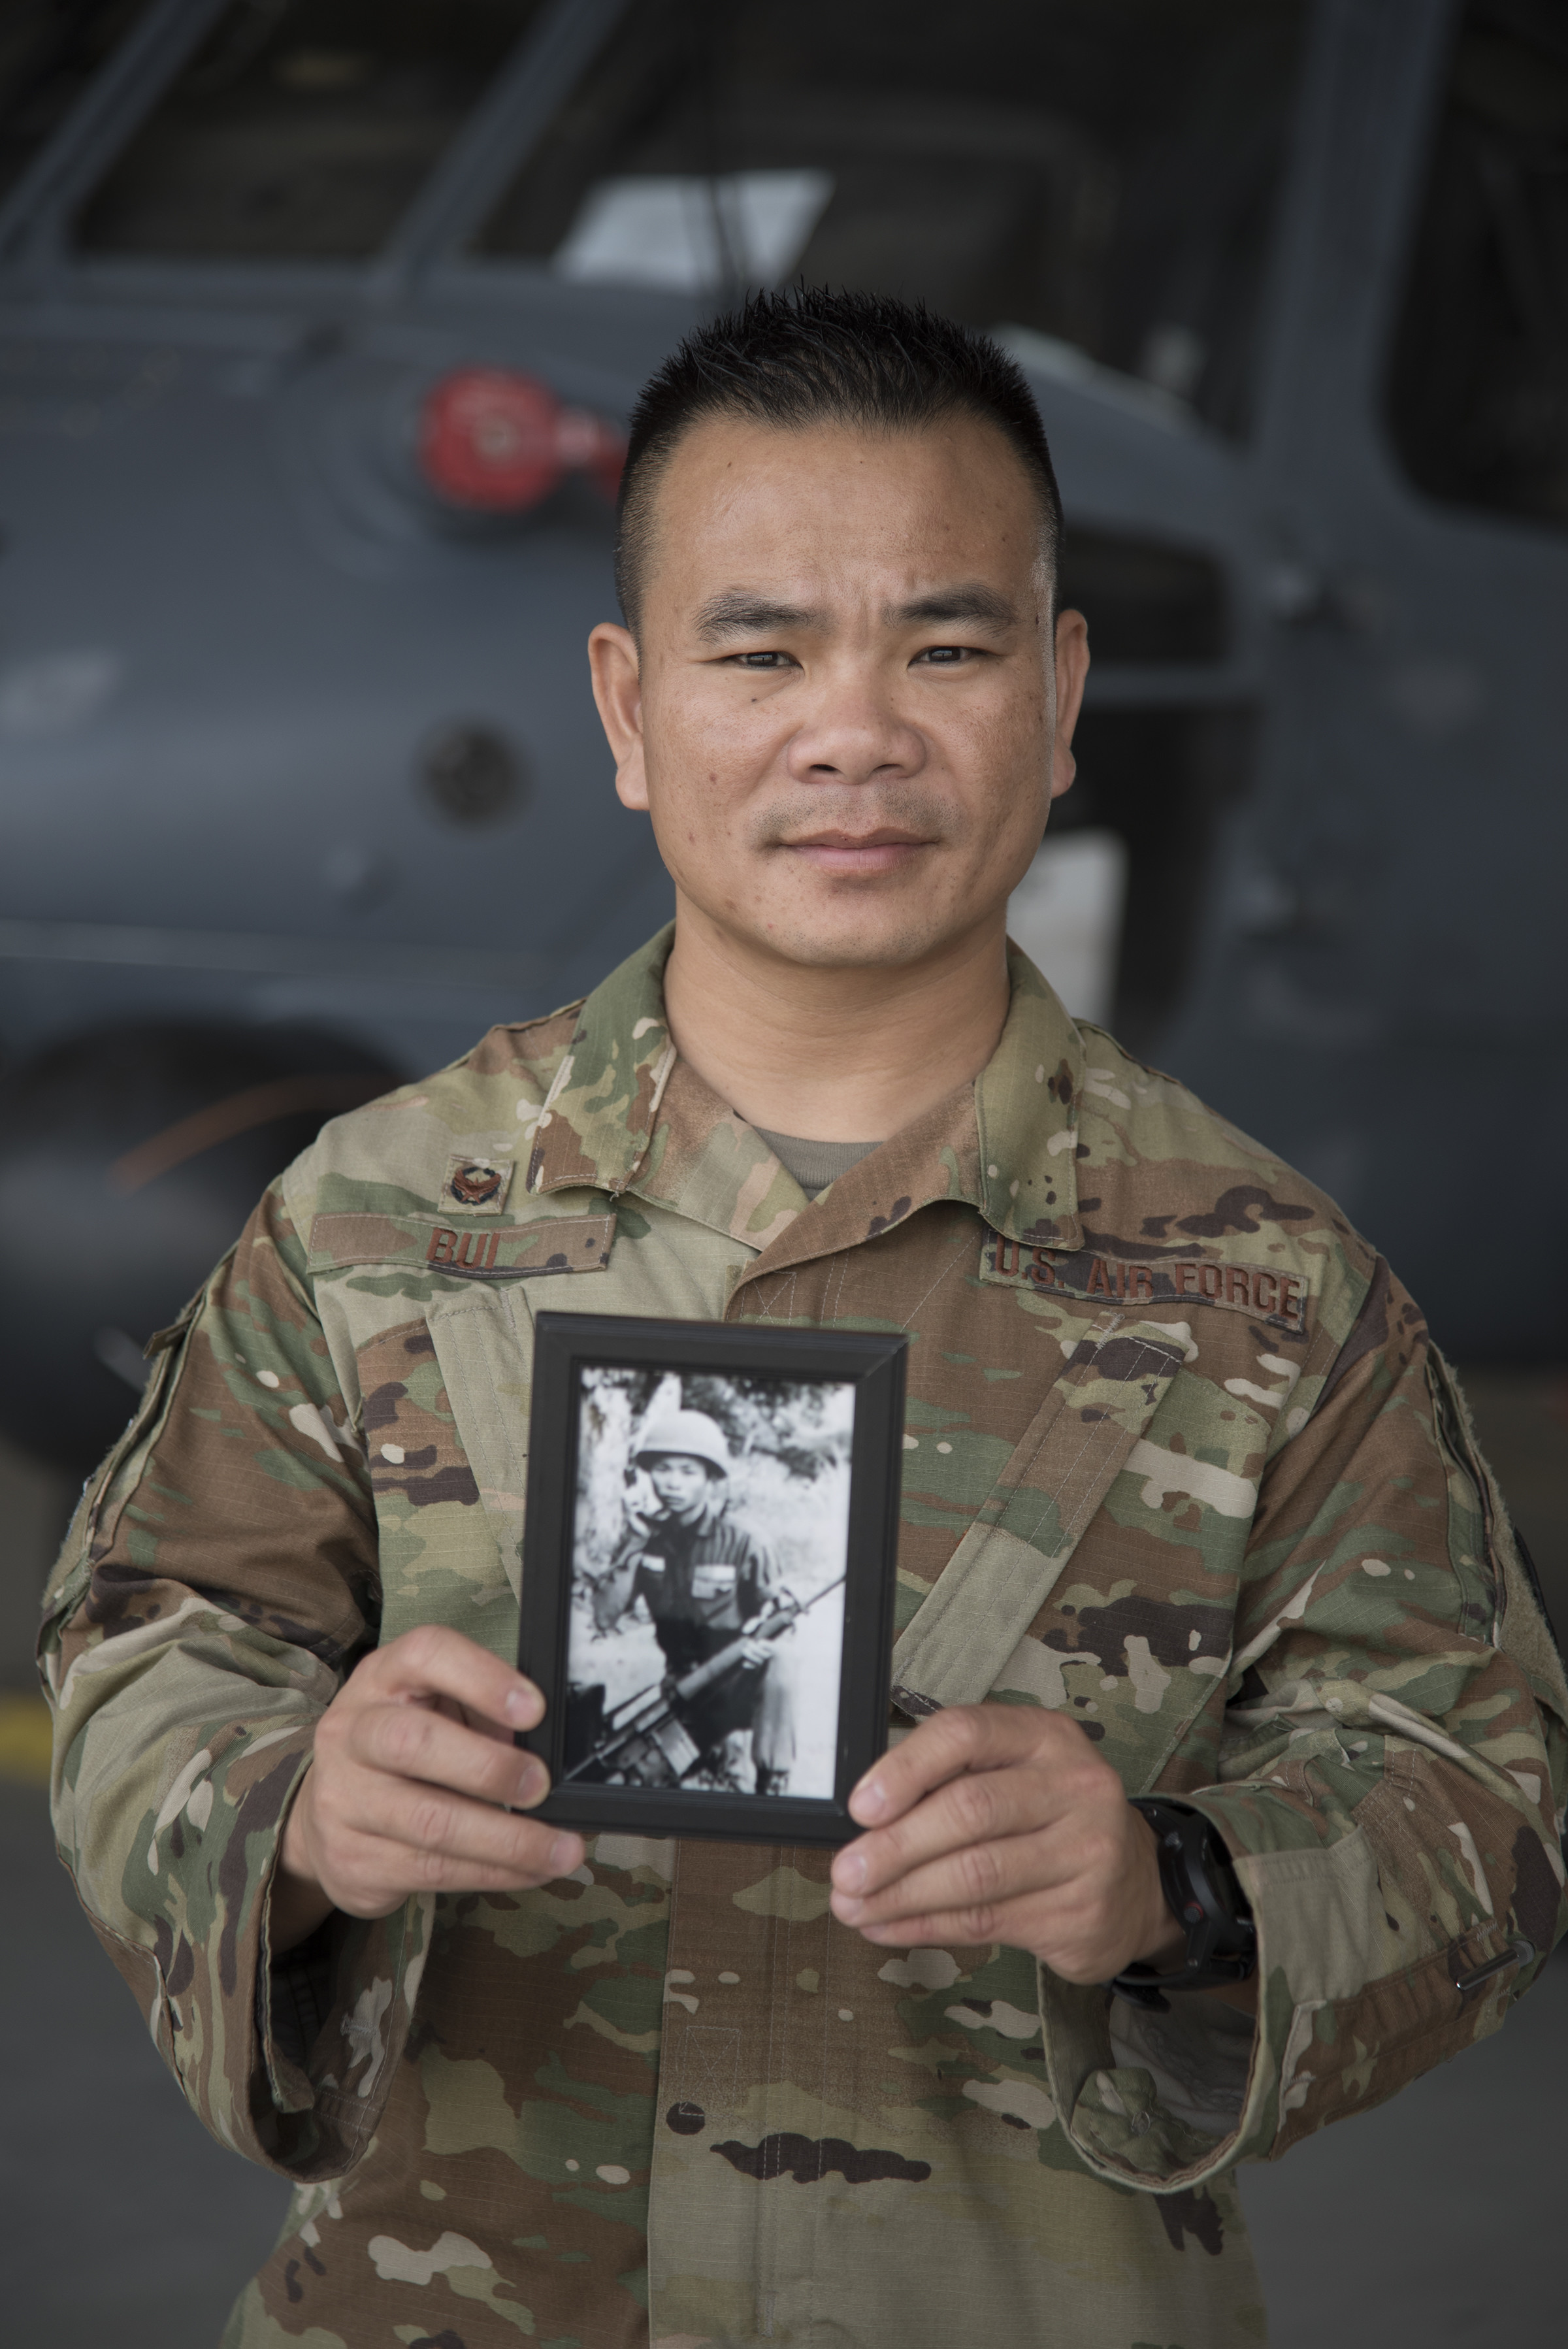 Us Air Force Reserve Commander Born At Sea After Parents Fled Vietnam